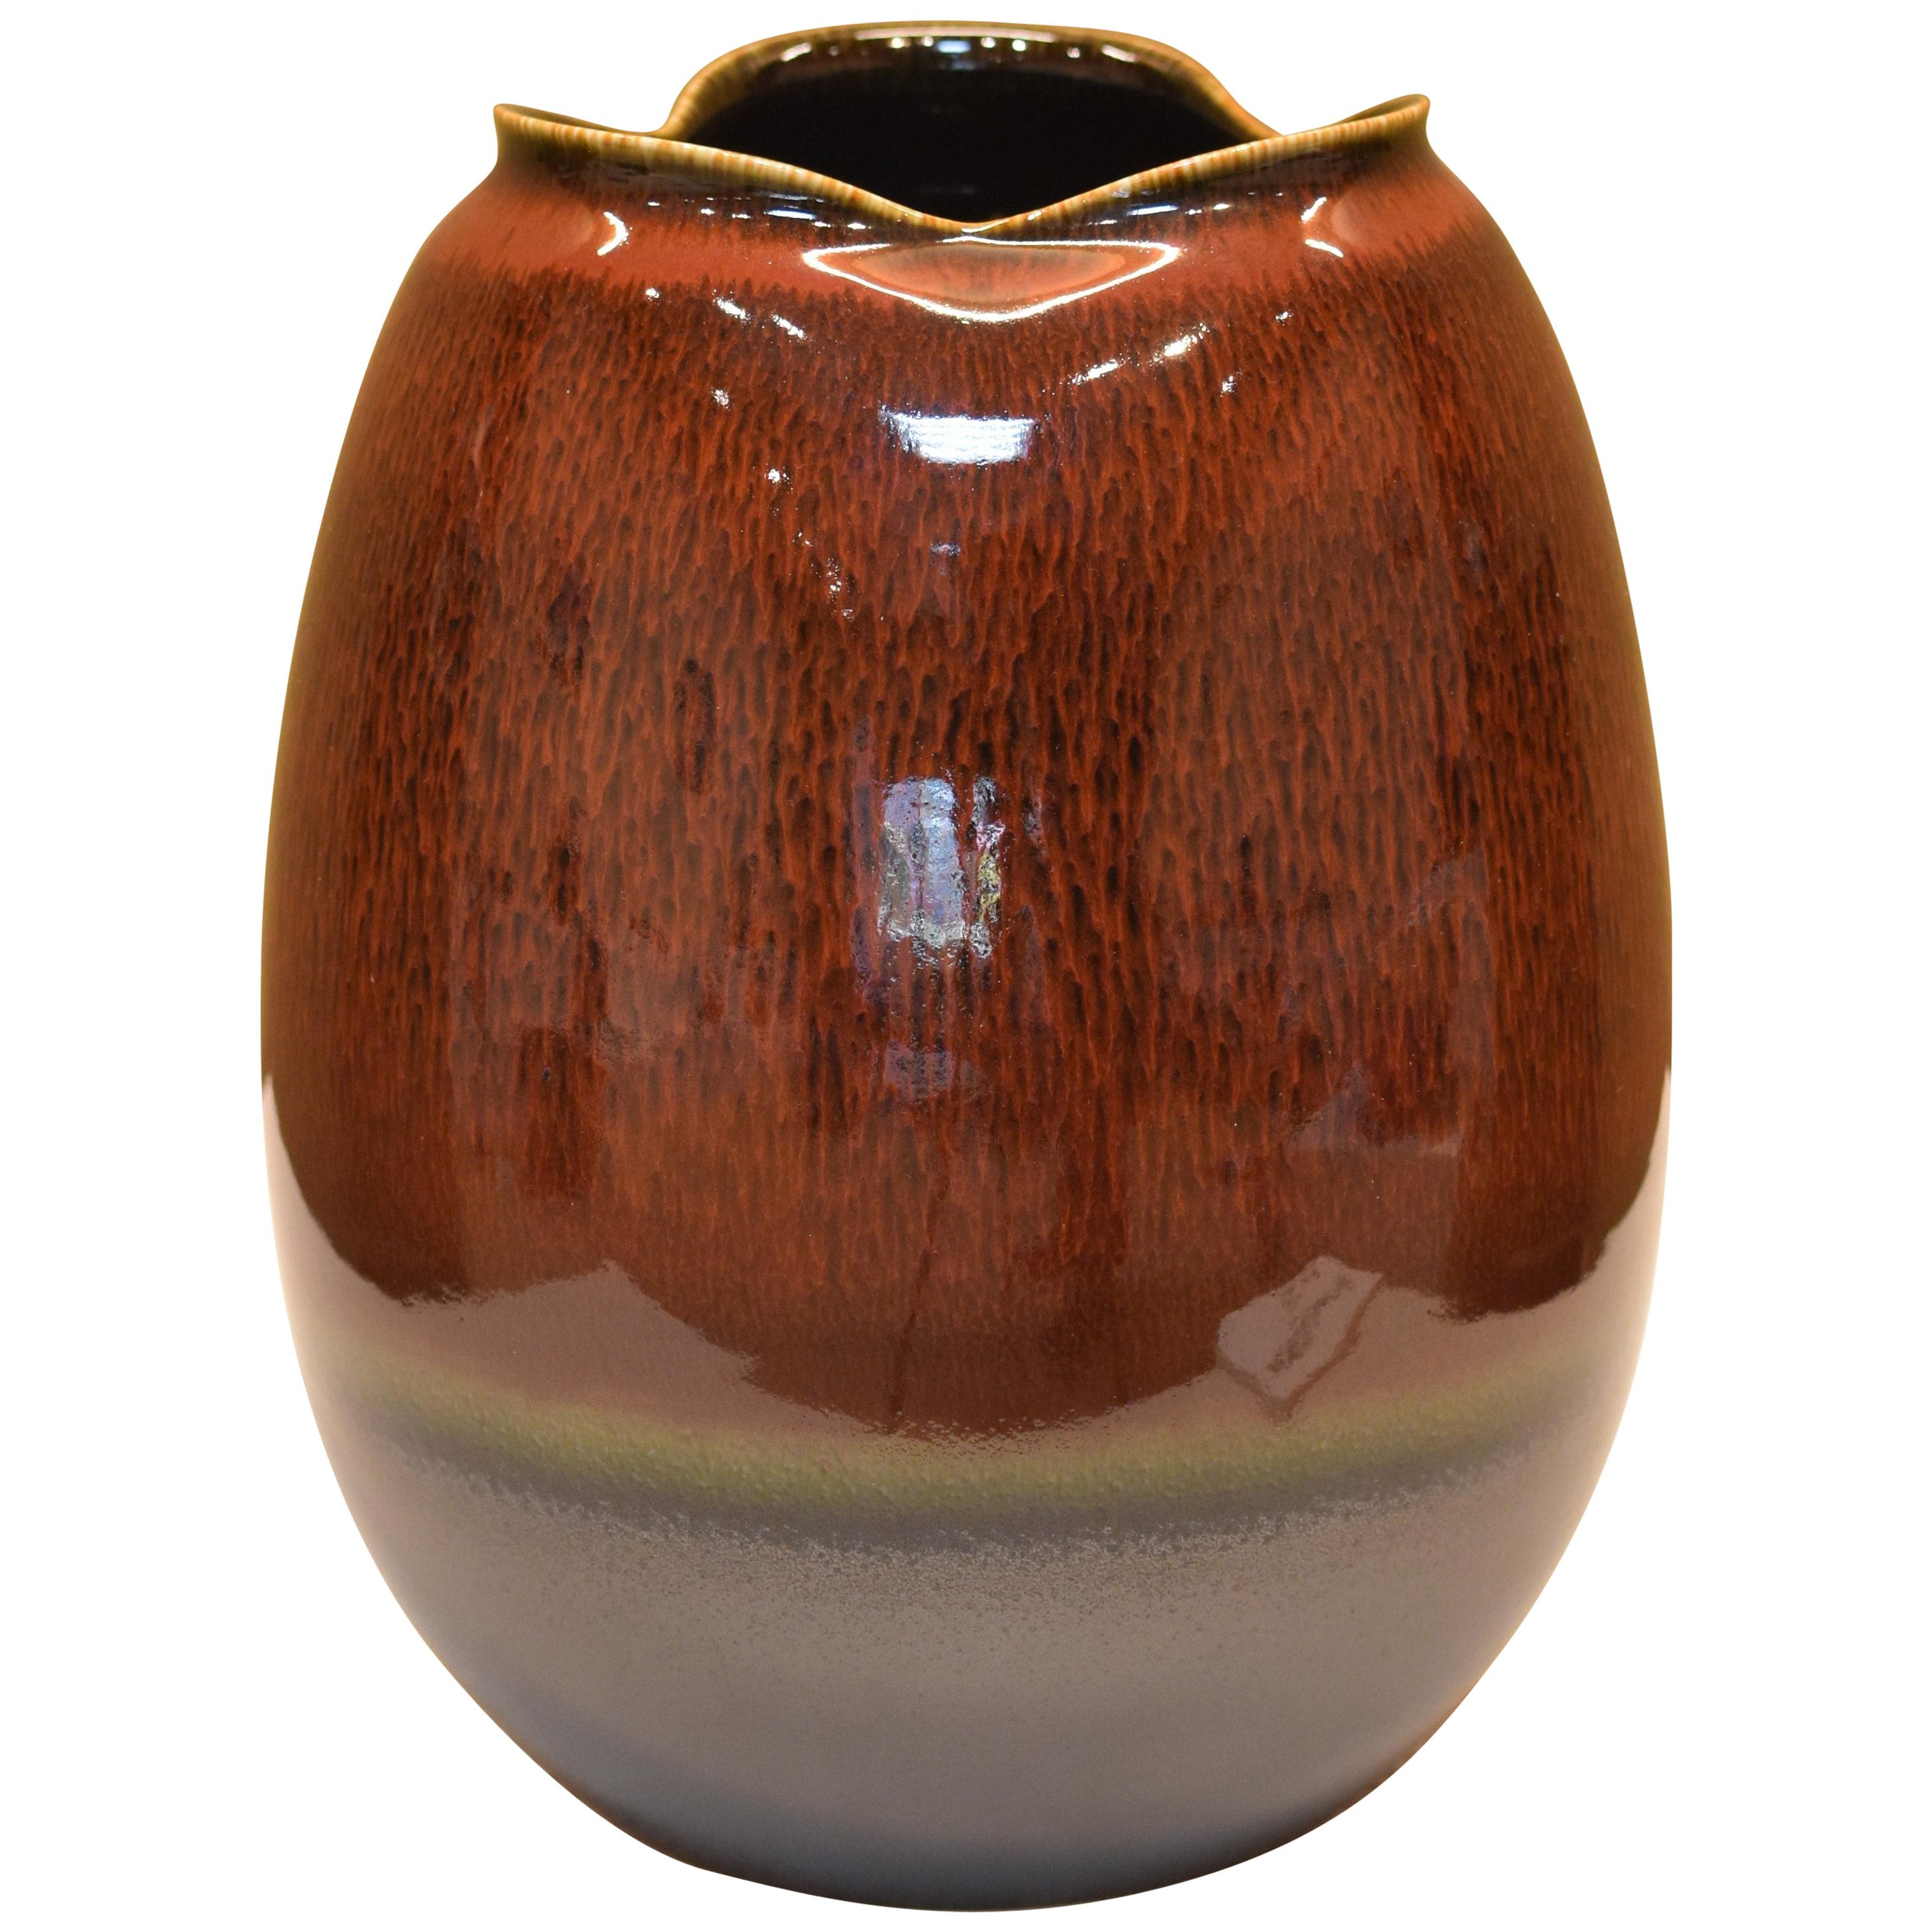 Contemporary Japanese Brown Black Hand-Glazed Porcelain Vase by Master Artist